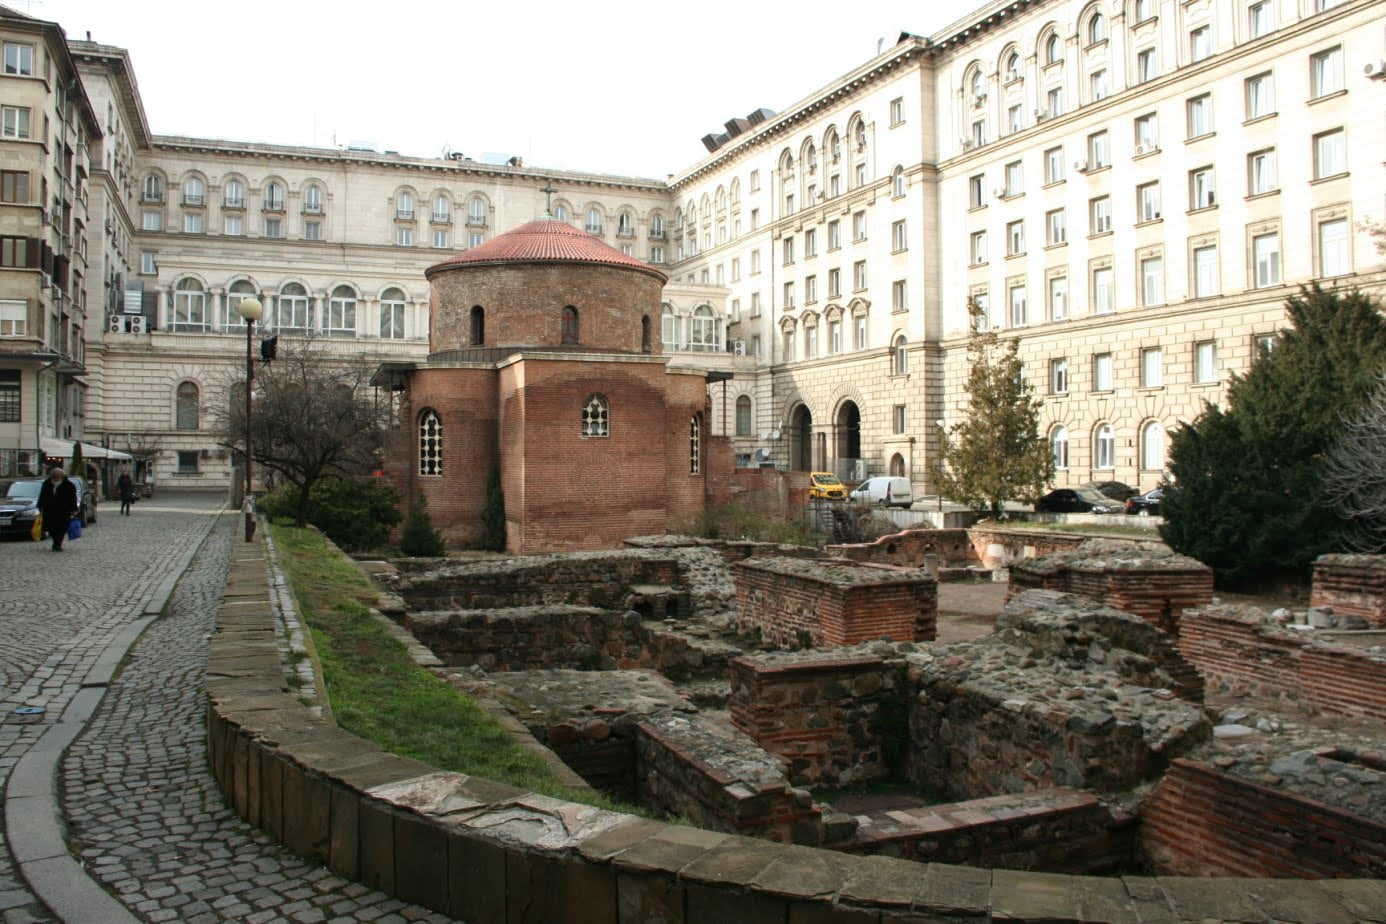 Ruins next to Saint George basilica